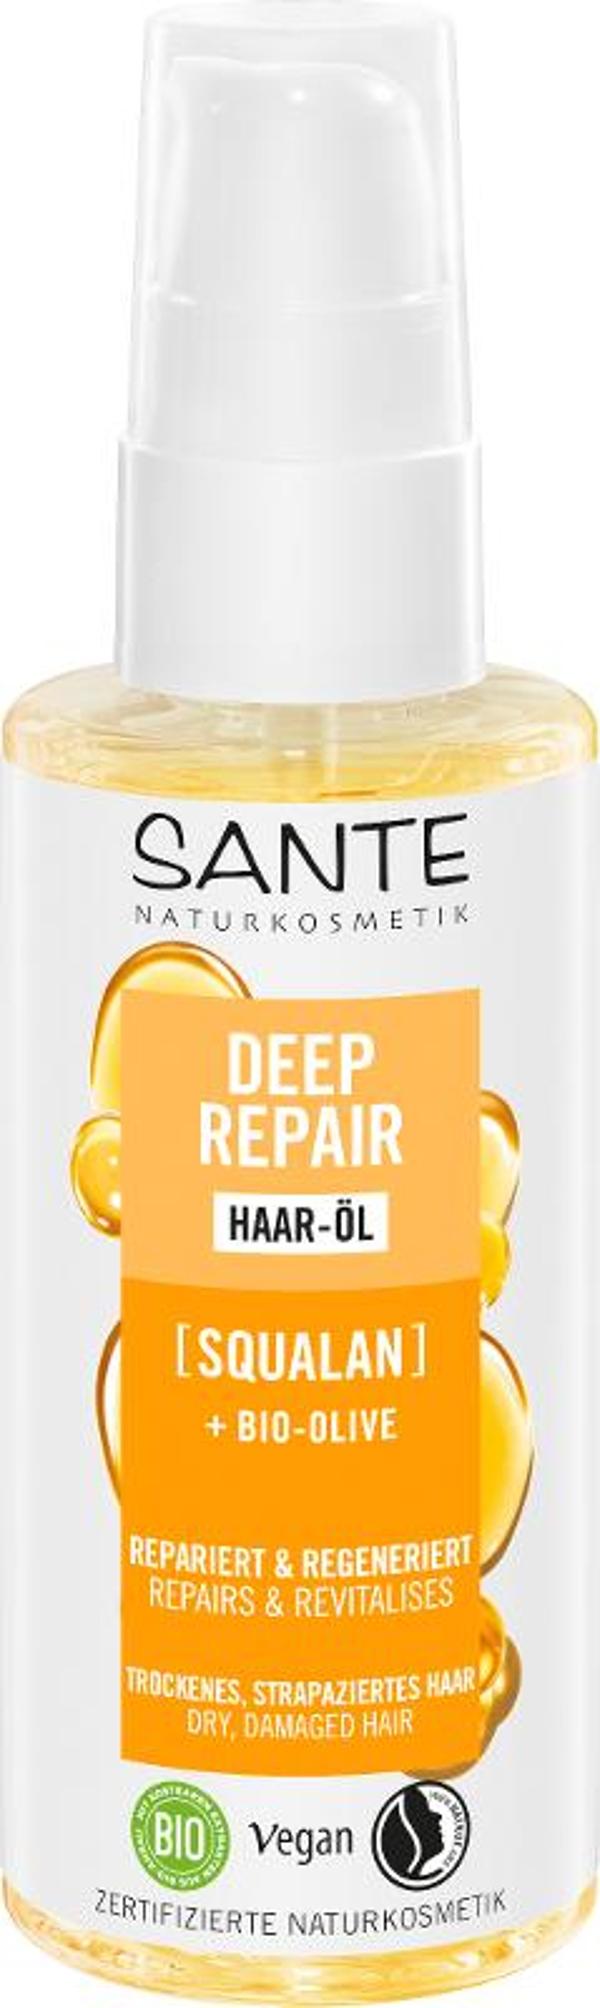 Produktfoto zu Deep Repair Haaröl 75ml Sante